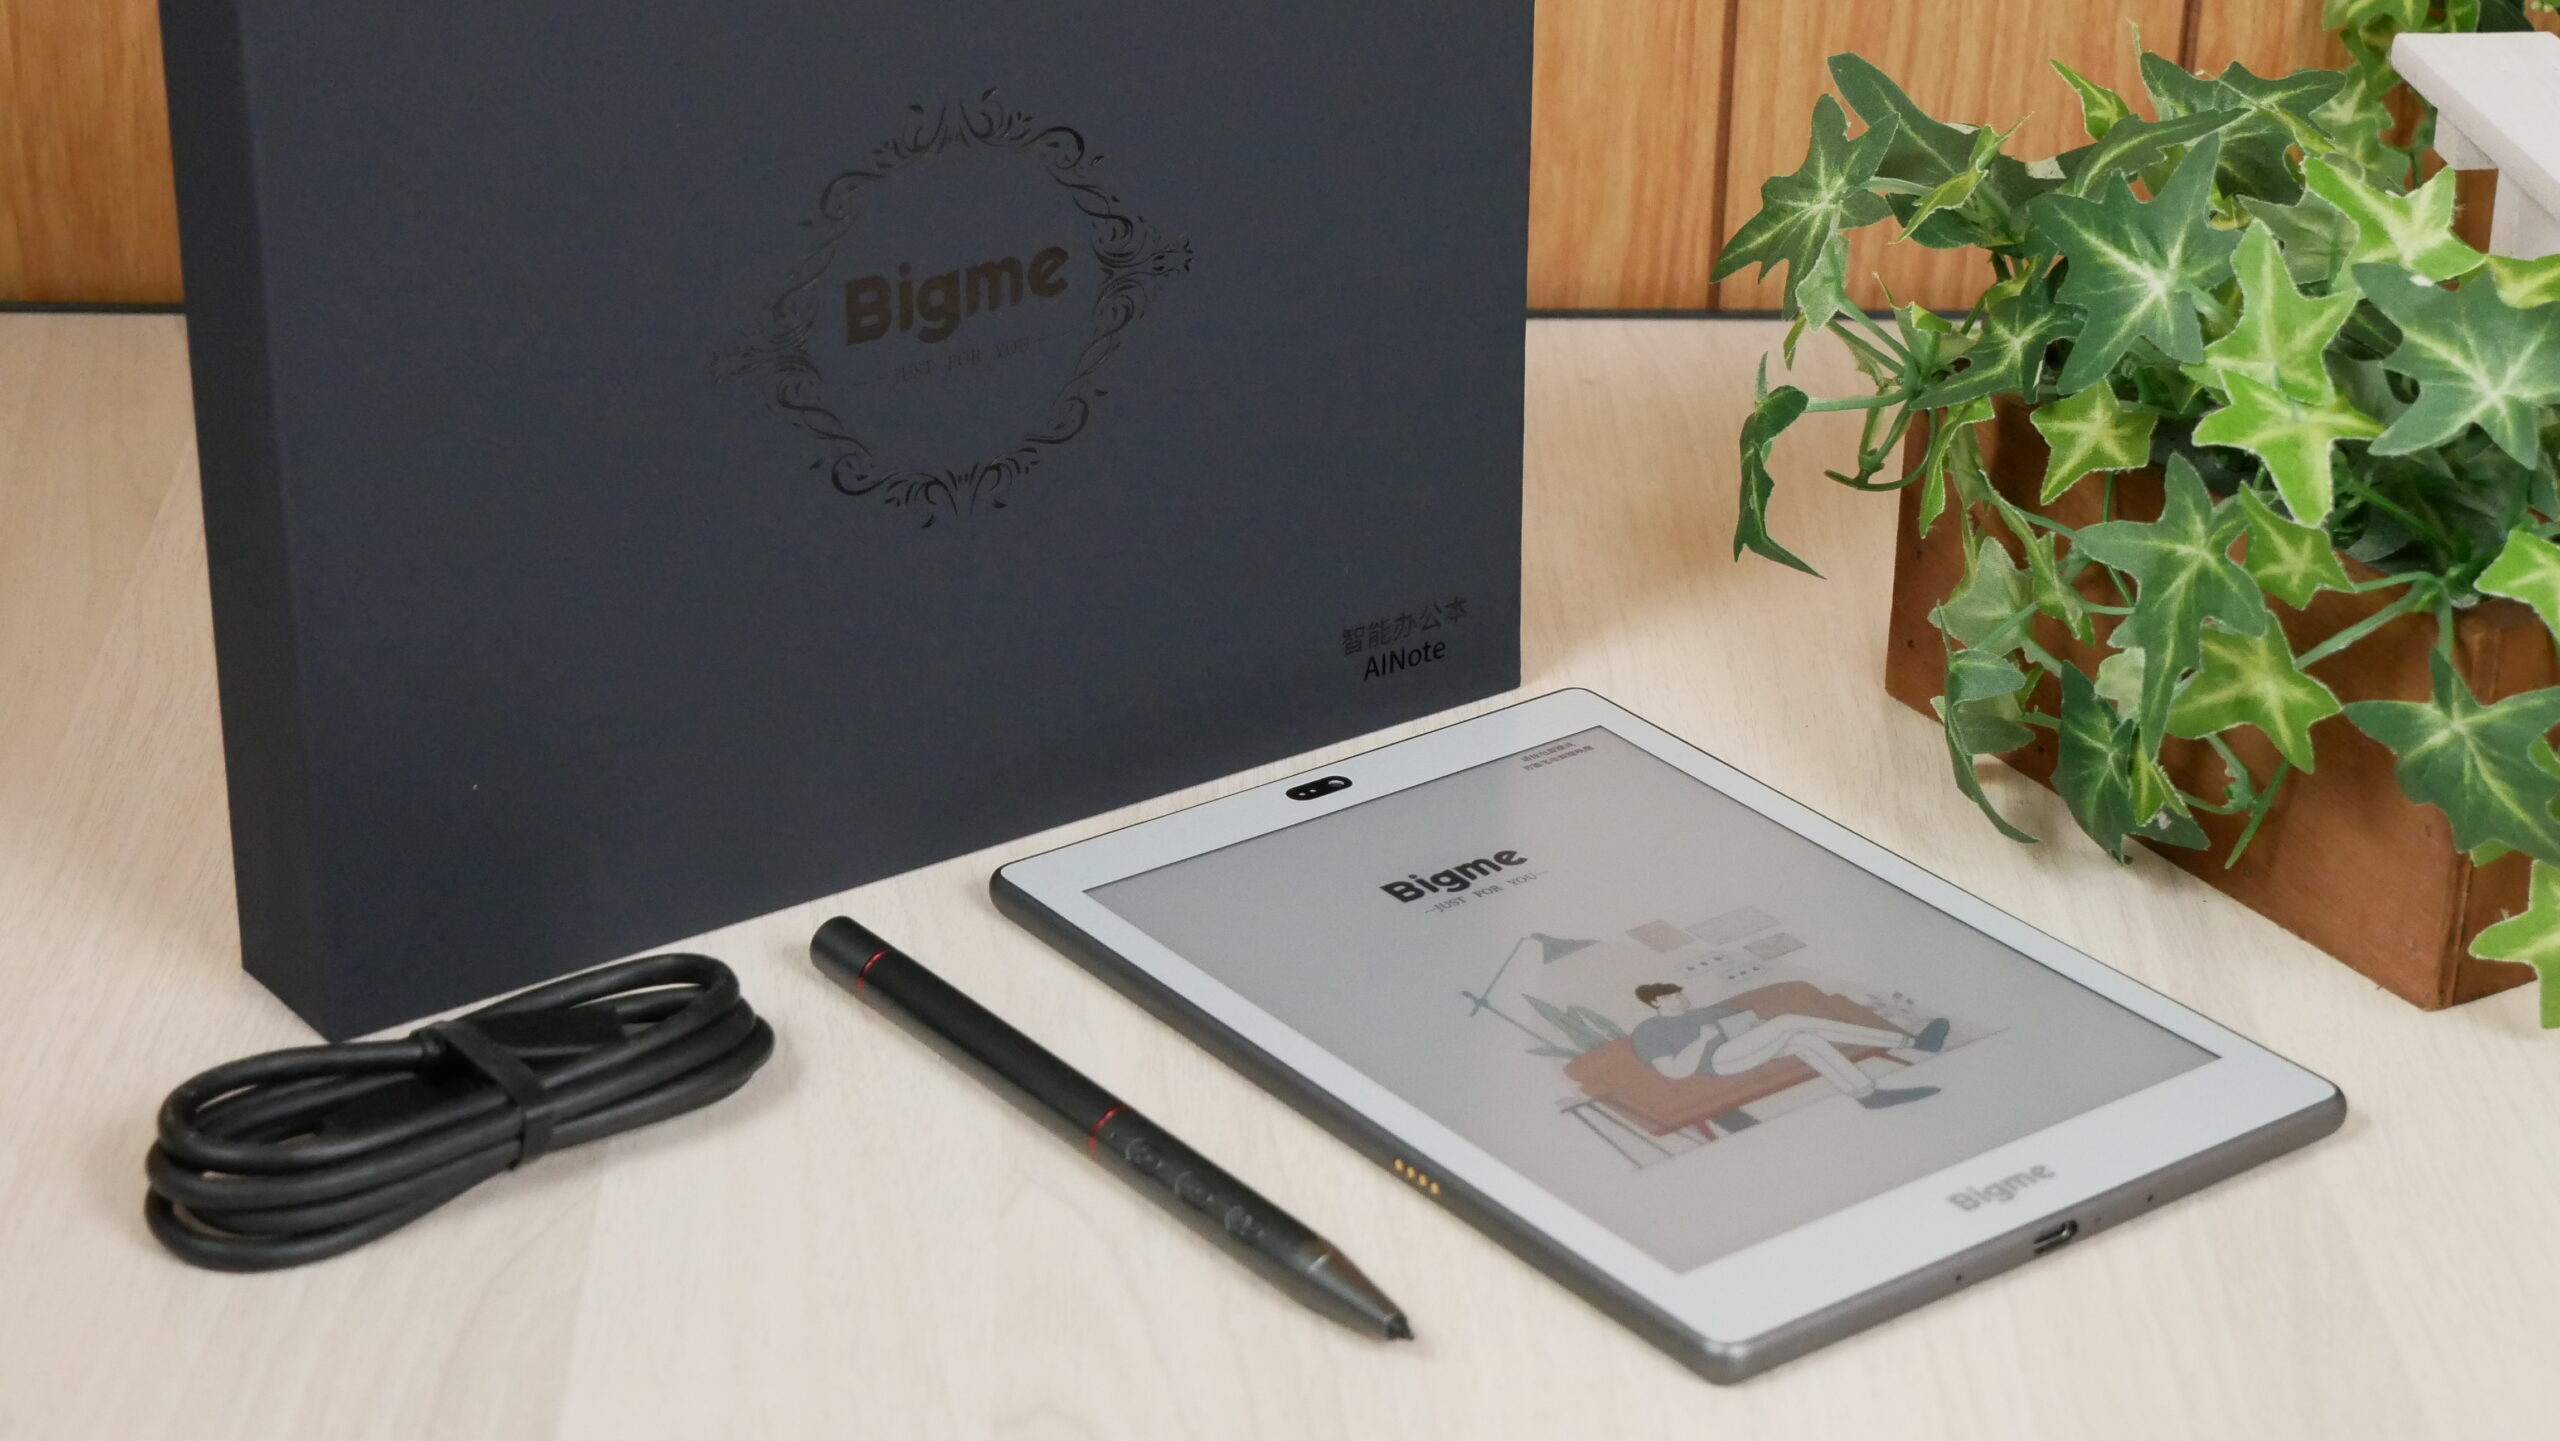 Bigme S6: електронна книга з кольоровим E-Ink дисплеєм і вбудованим ChatGPT за $500